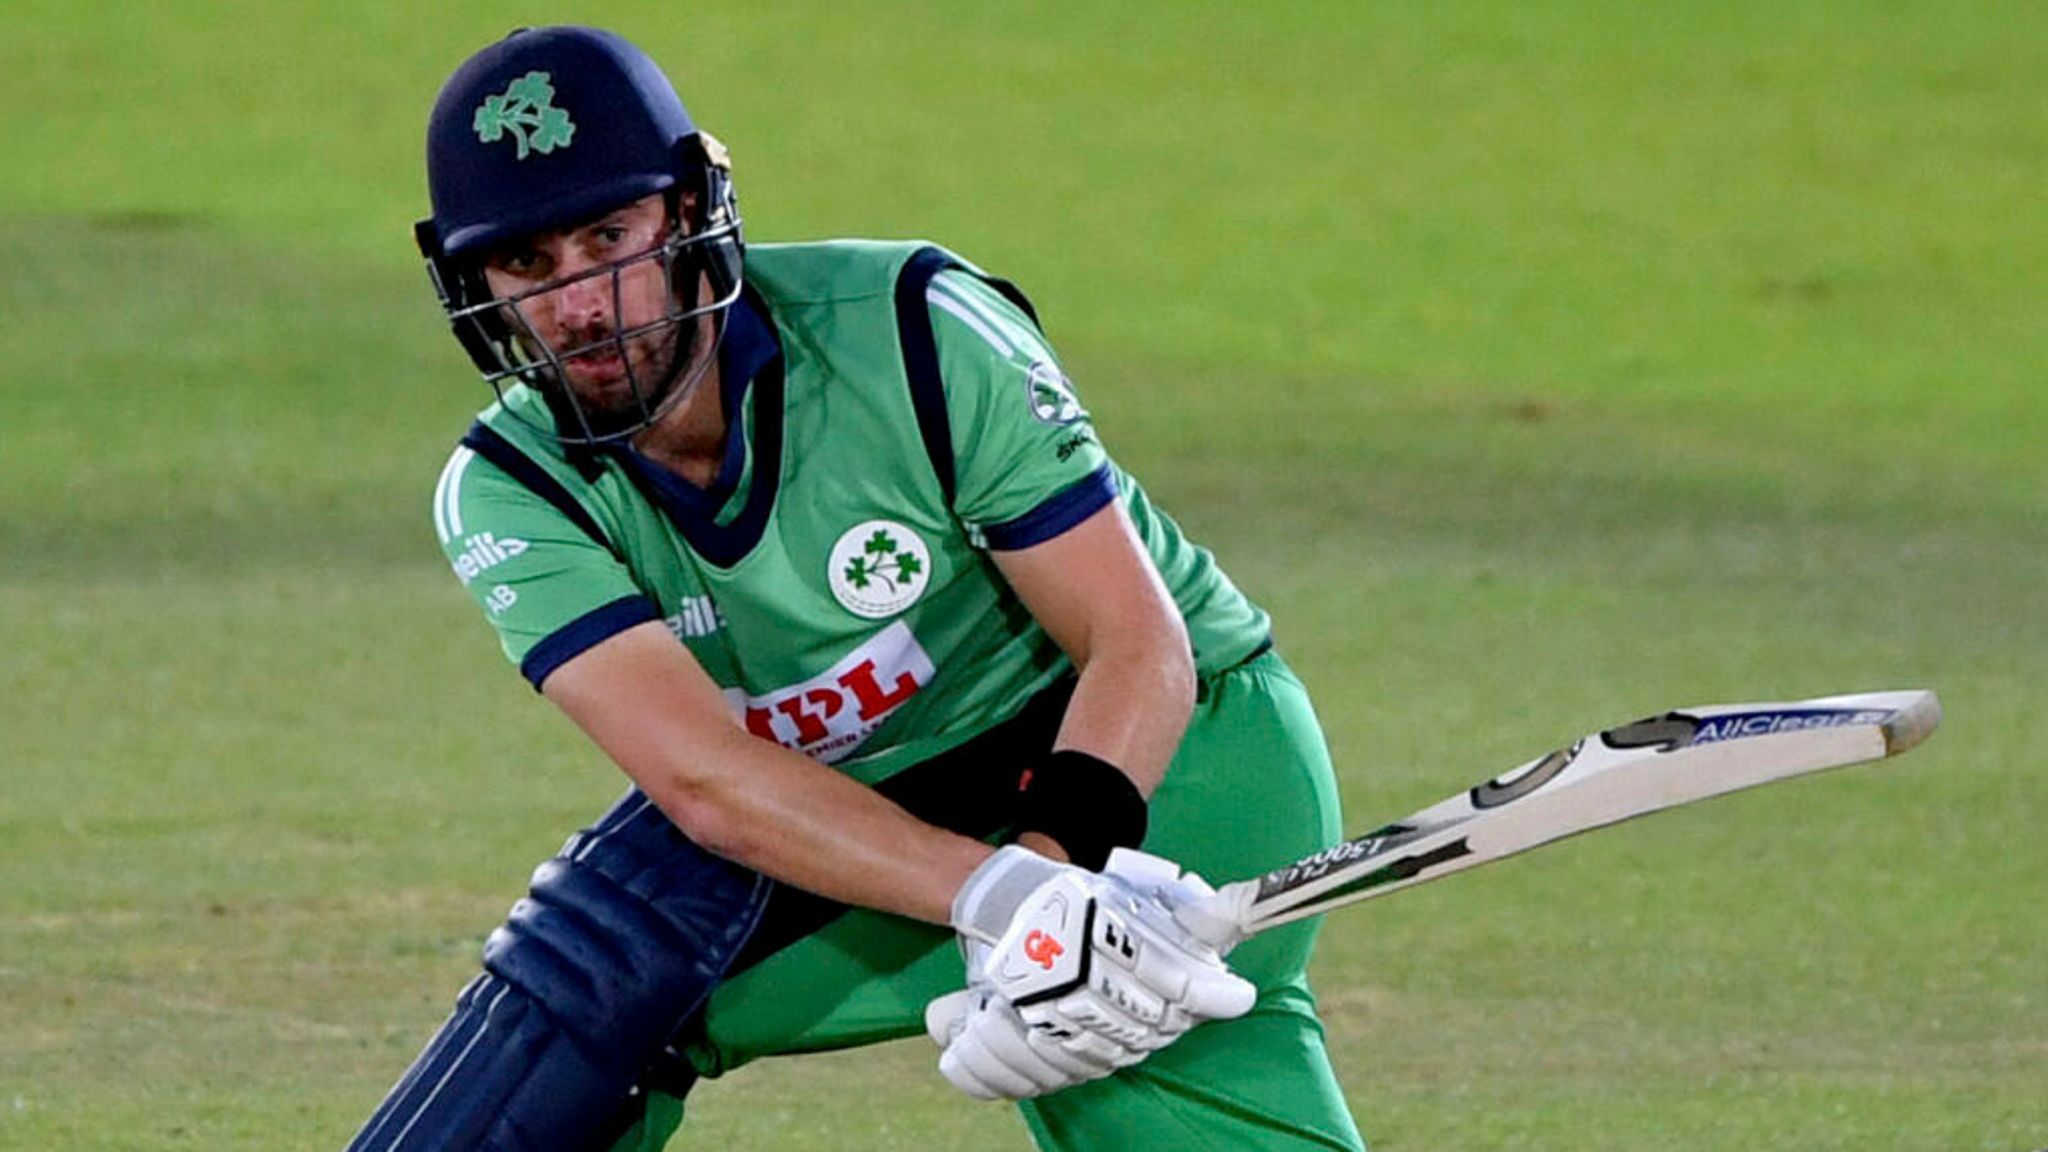 Ireland captain Andrew Balbirnie excited ahead of Ireland's seven ODIs in UAE | Cricket News | Sky Sports